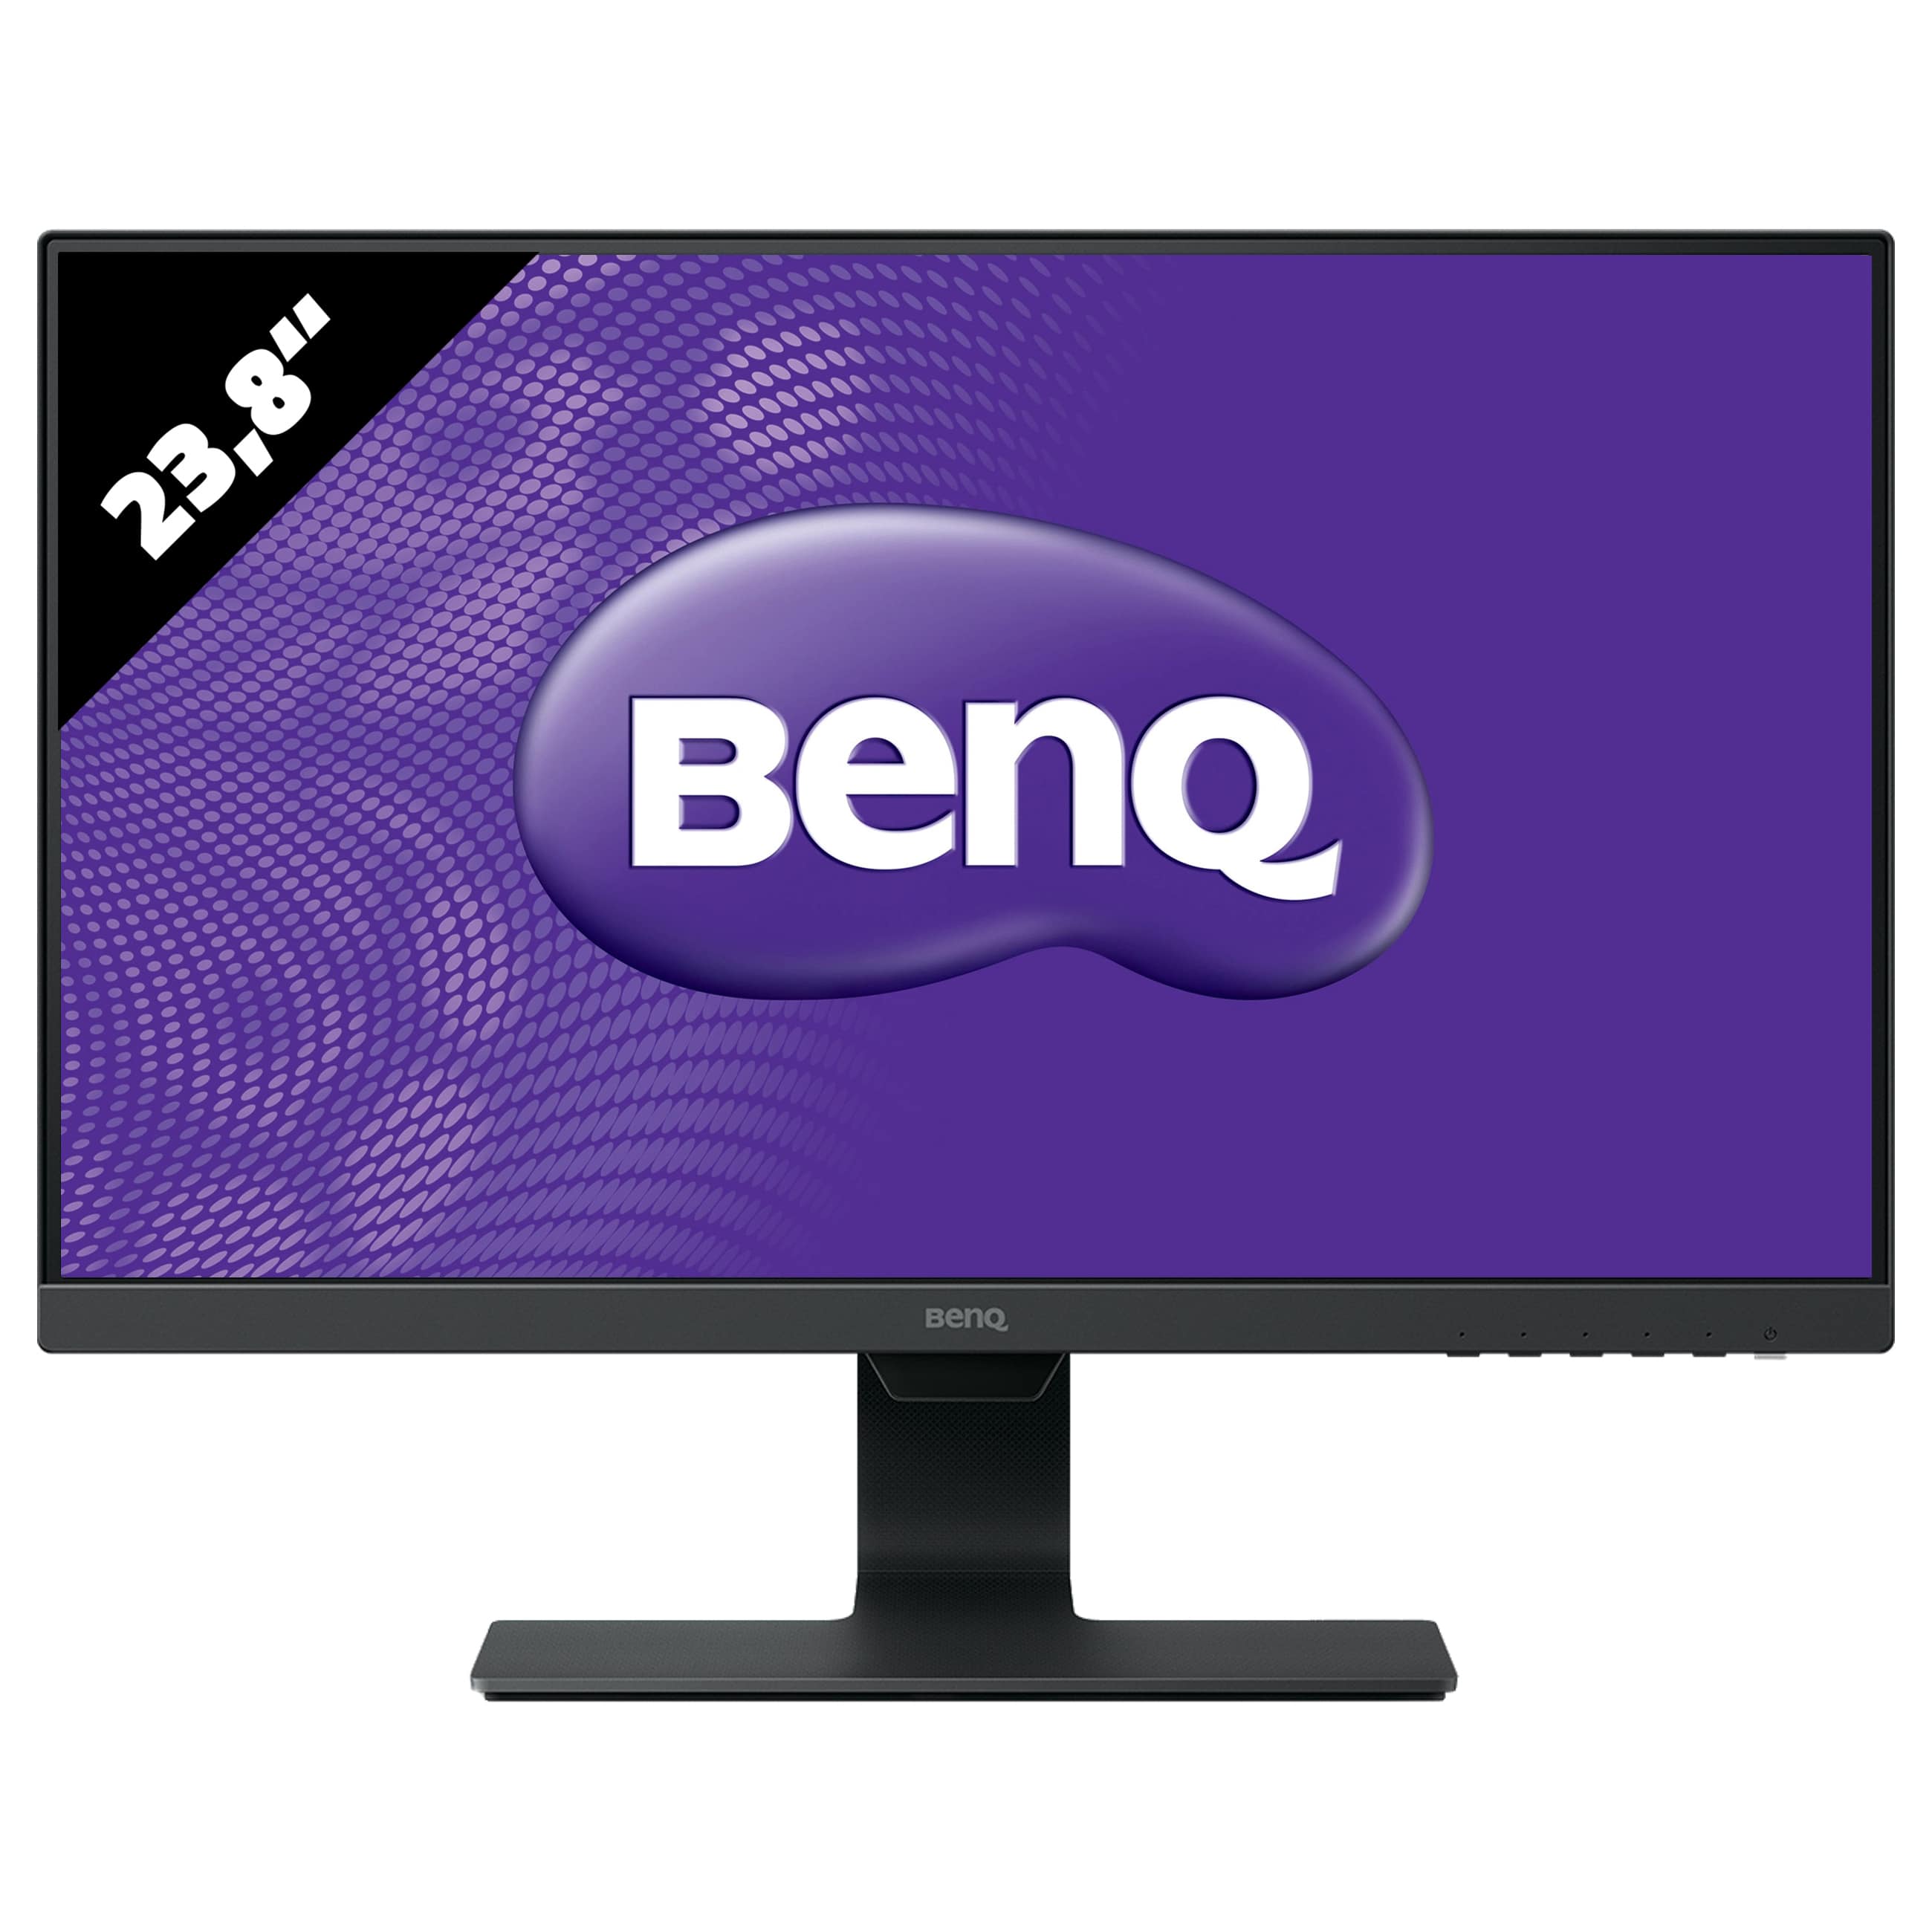 Benq LCD Monitor GW2460-B - 1920 x 1080 - FHD